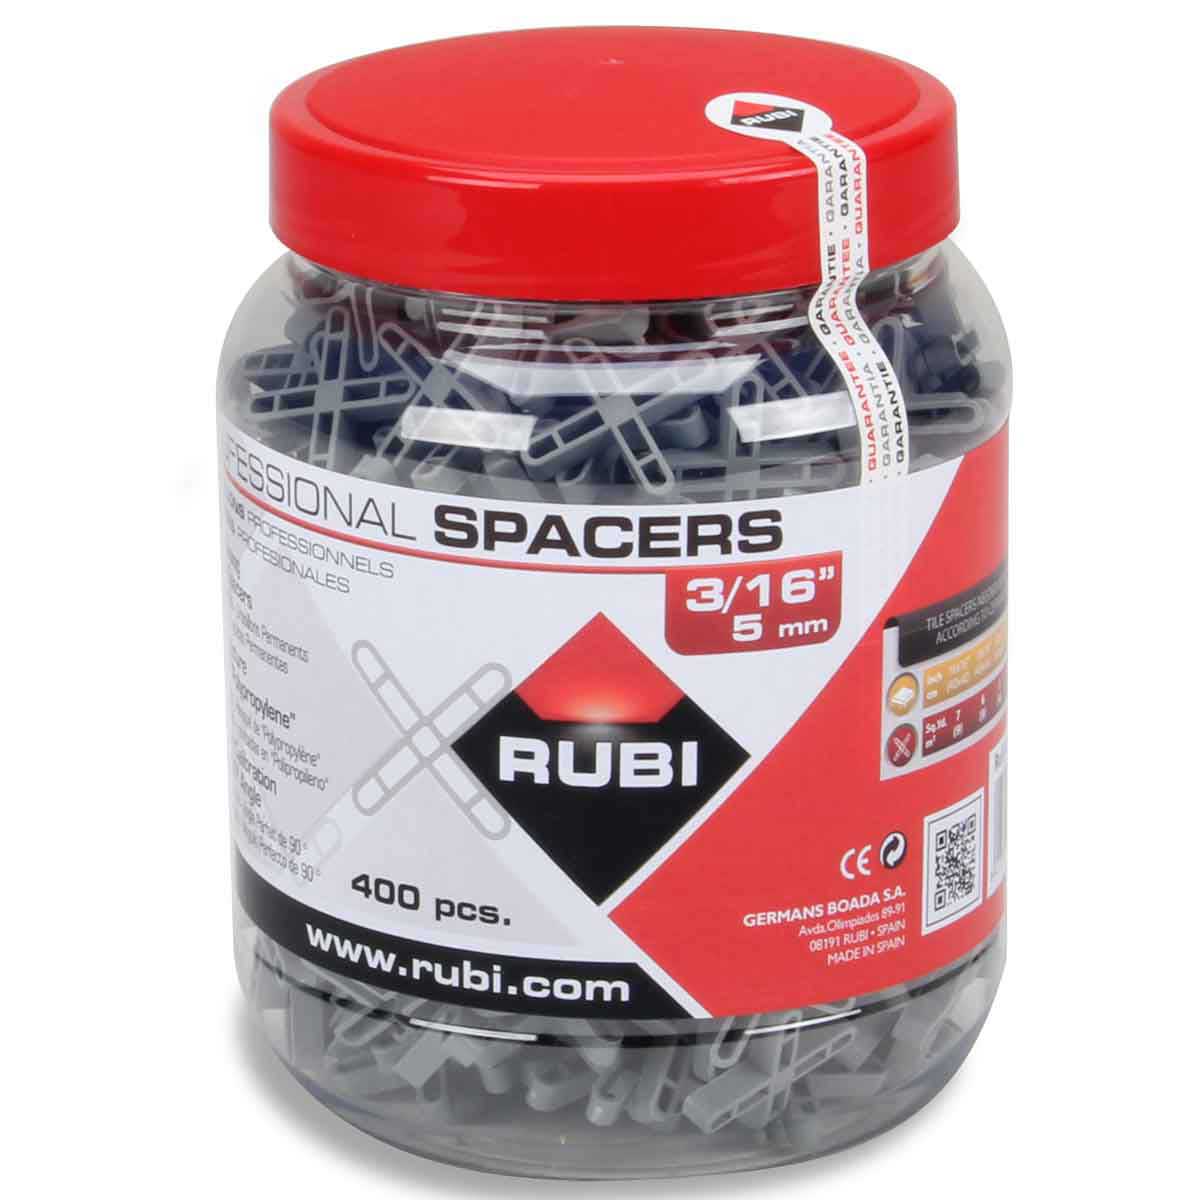 Rubi Leave-In Spacers Jar. Contractors Direct